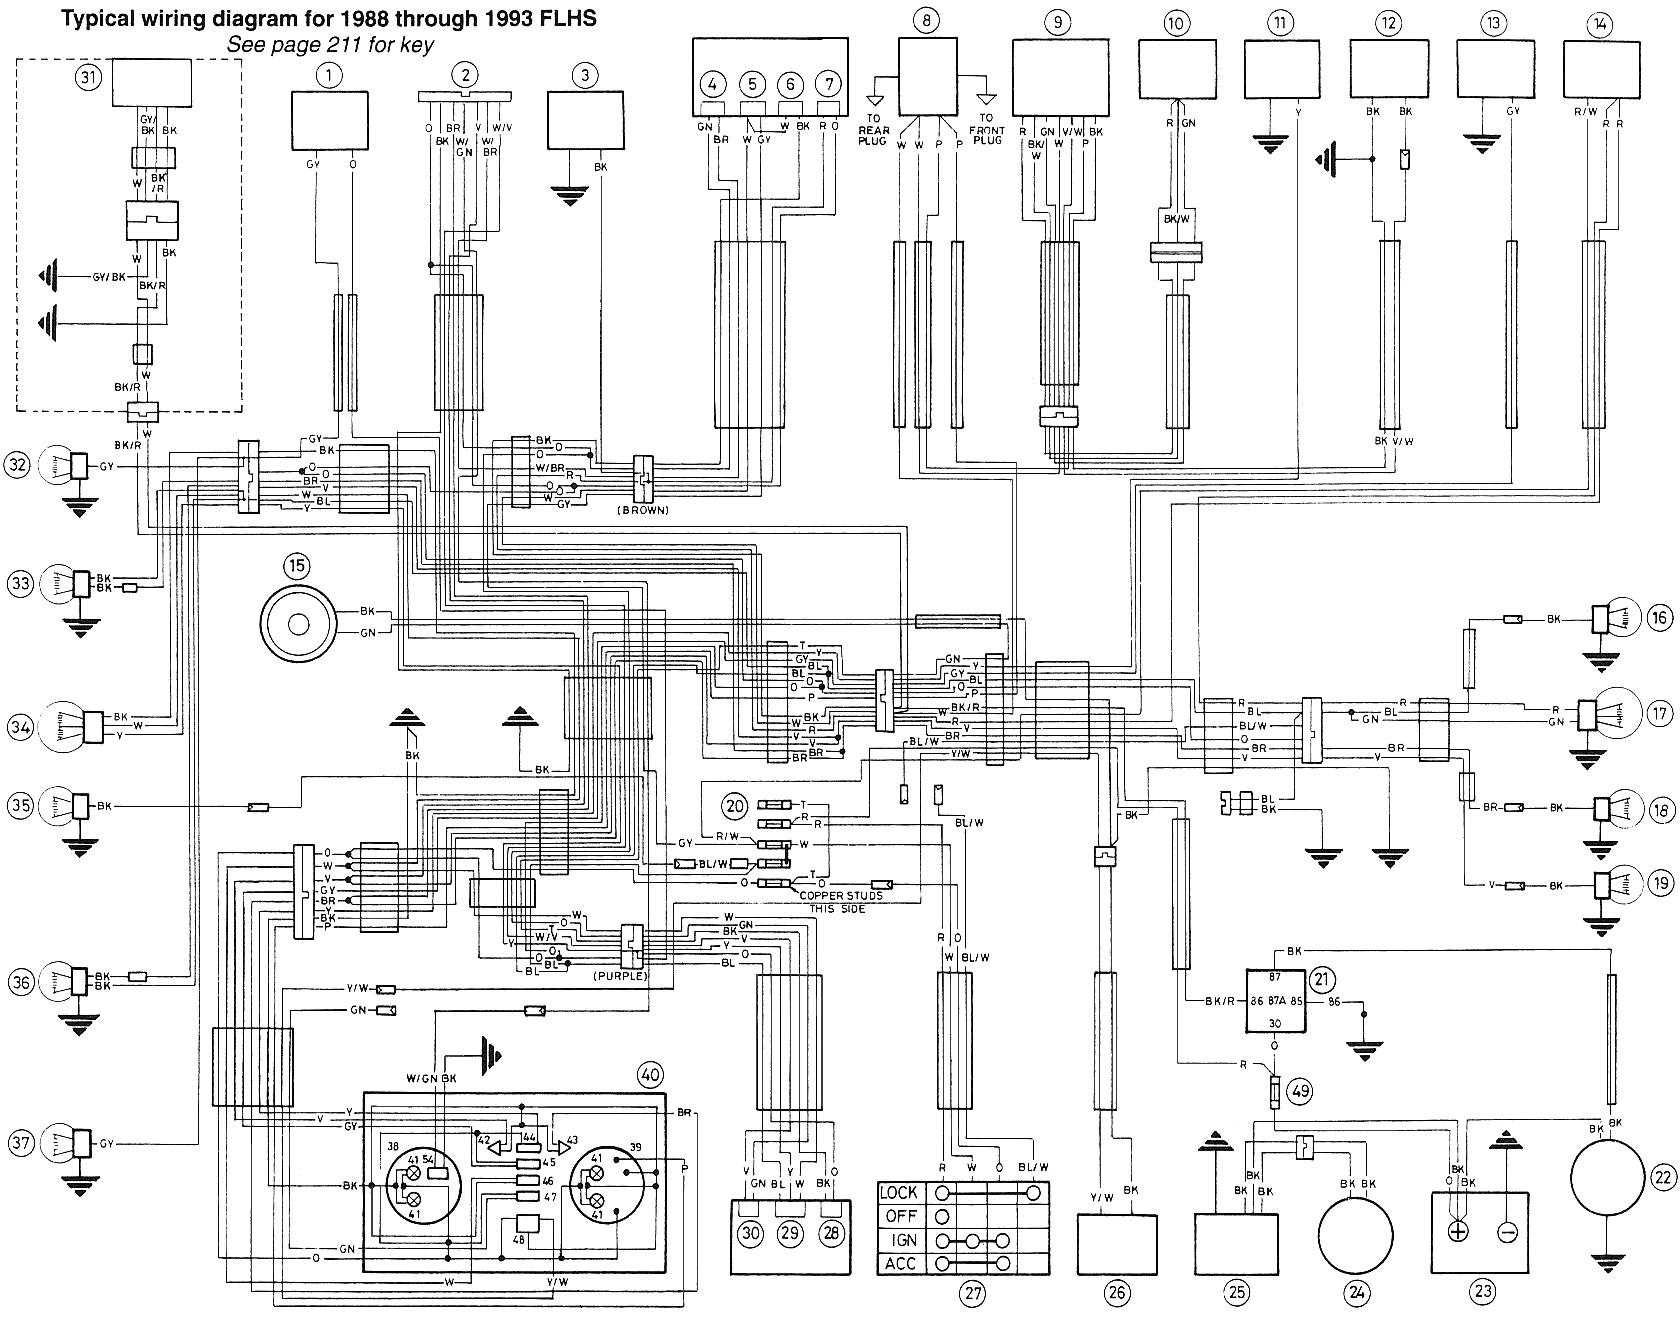 harley handlebar wiring diagram new 1979 harley davidson shovelhead wiring diagram of harley handlebar wiring diagram jpg